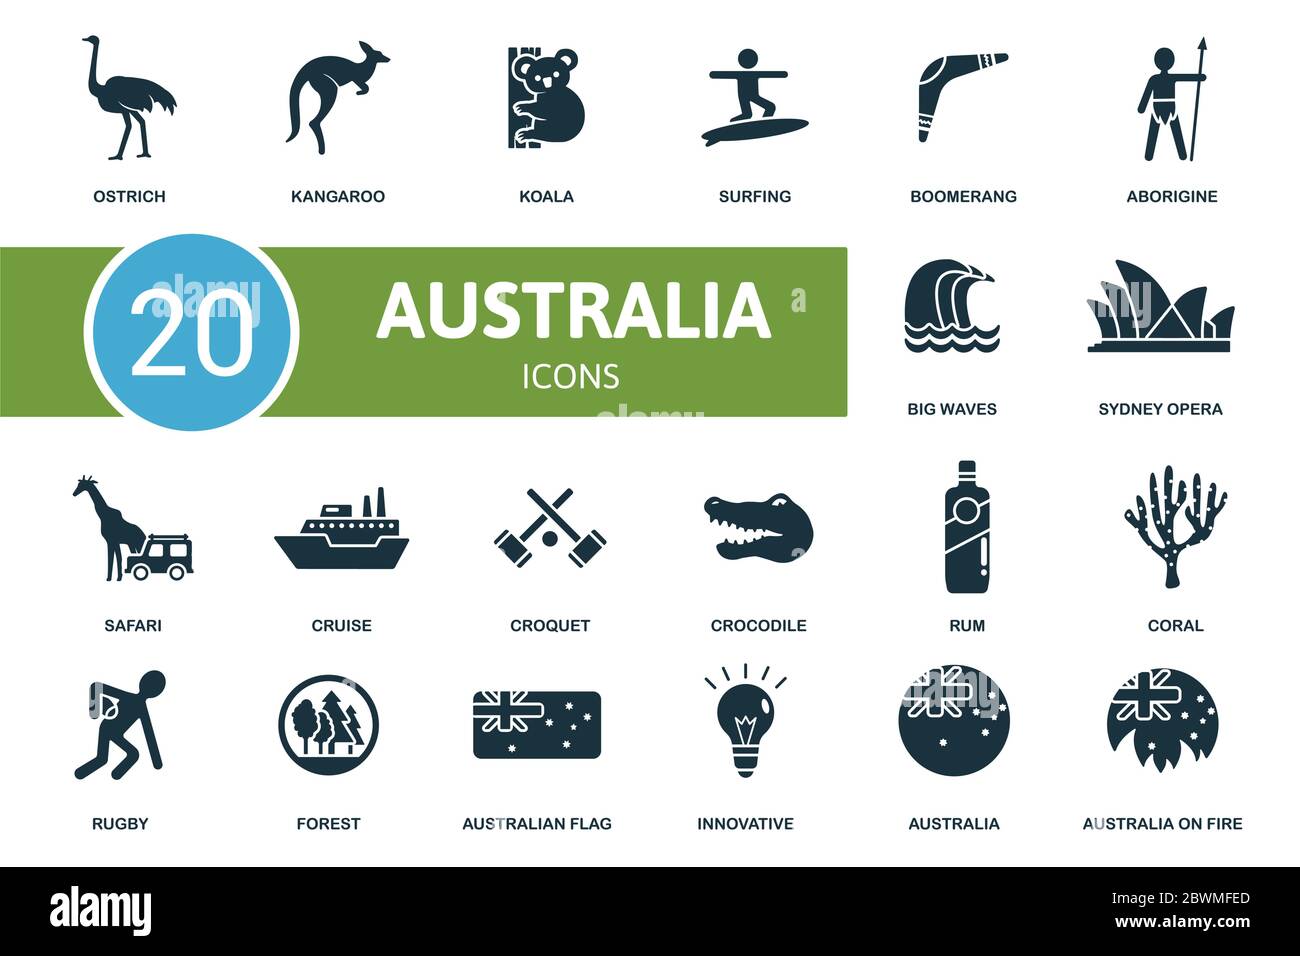 Australia icon set. Collection contain kangaroo, koala, boomerang, opera, australia and over icons. Australia elements set Stock Vector